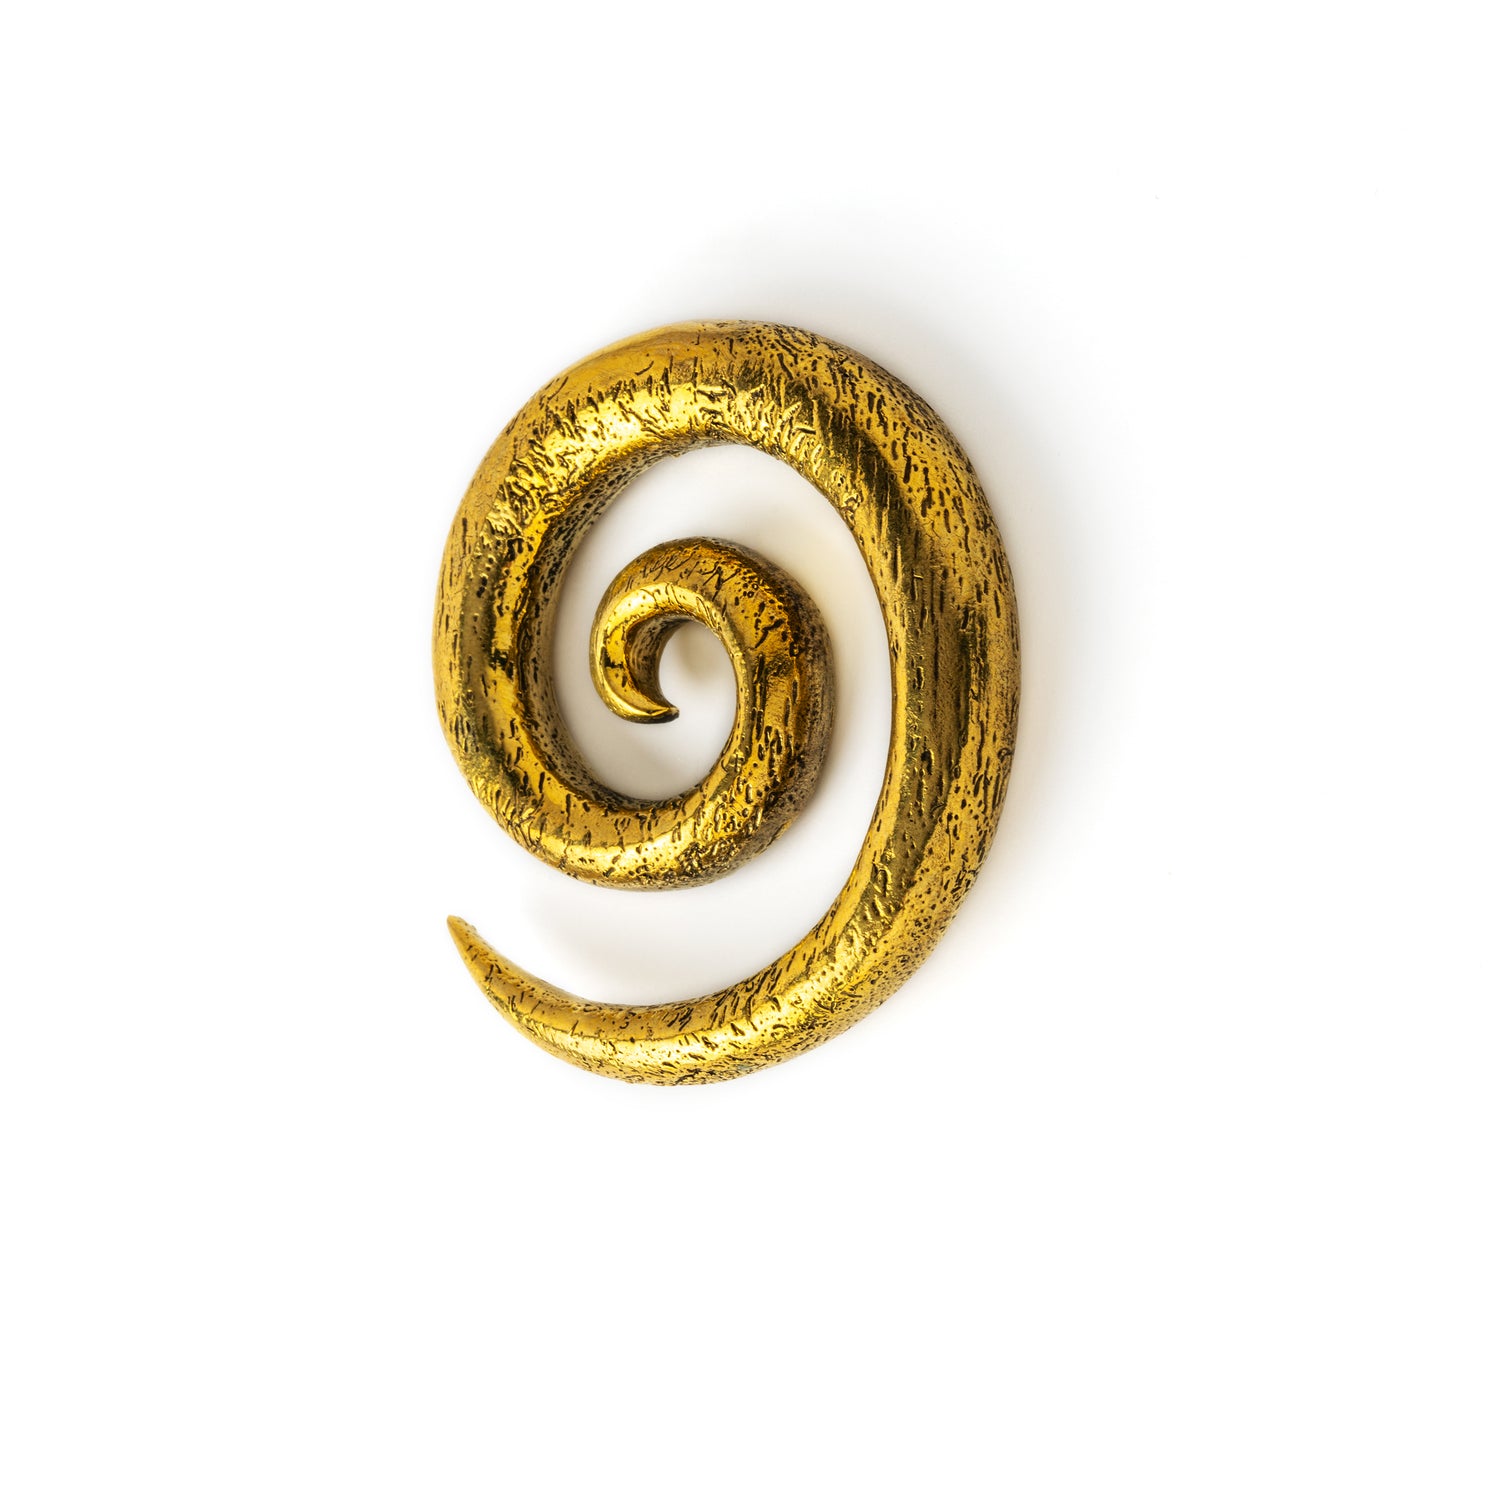 single golden brass spiral ear wight hanger back side view